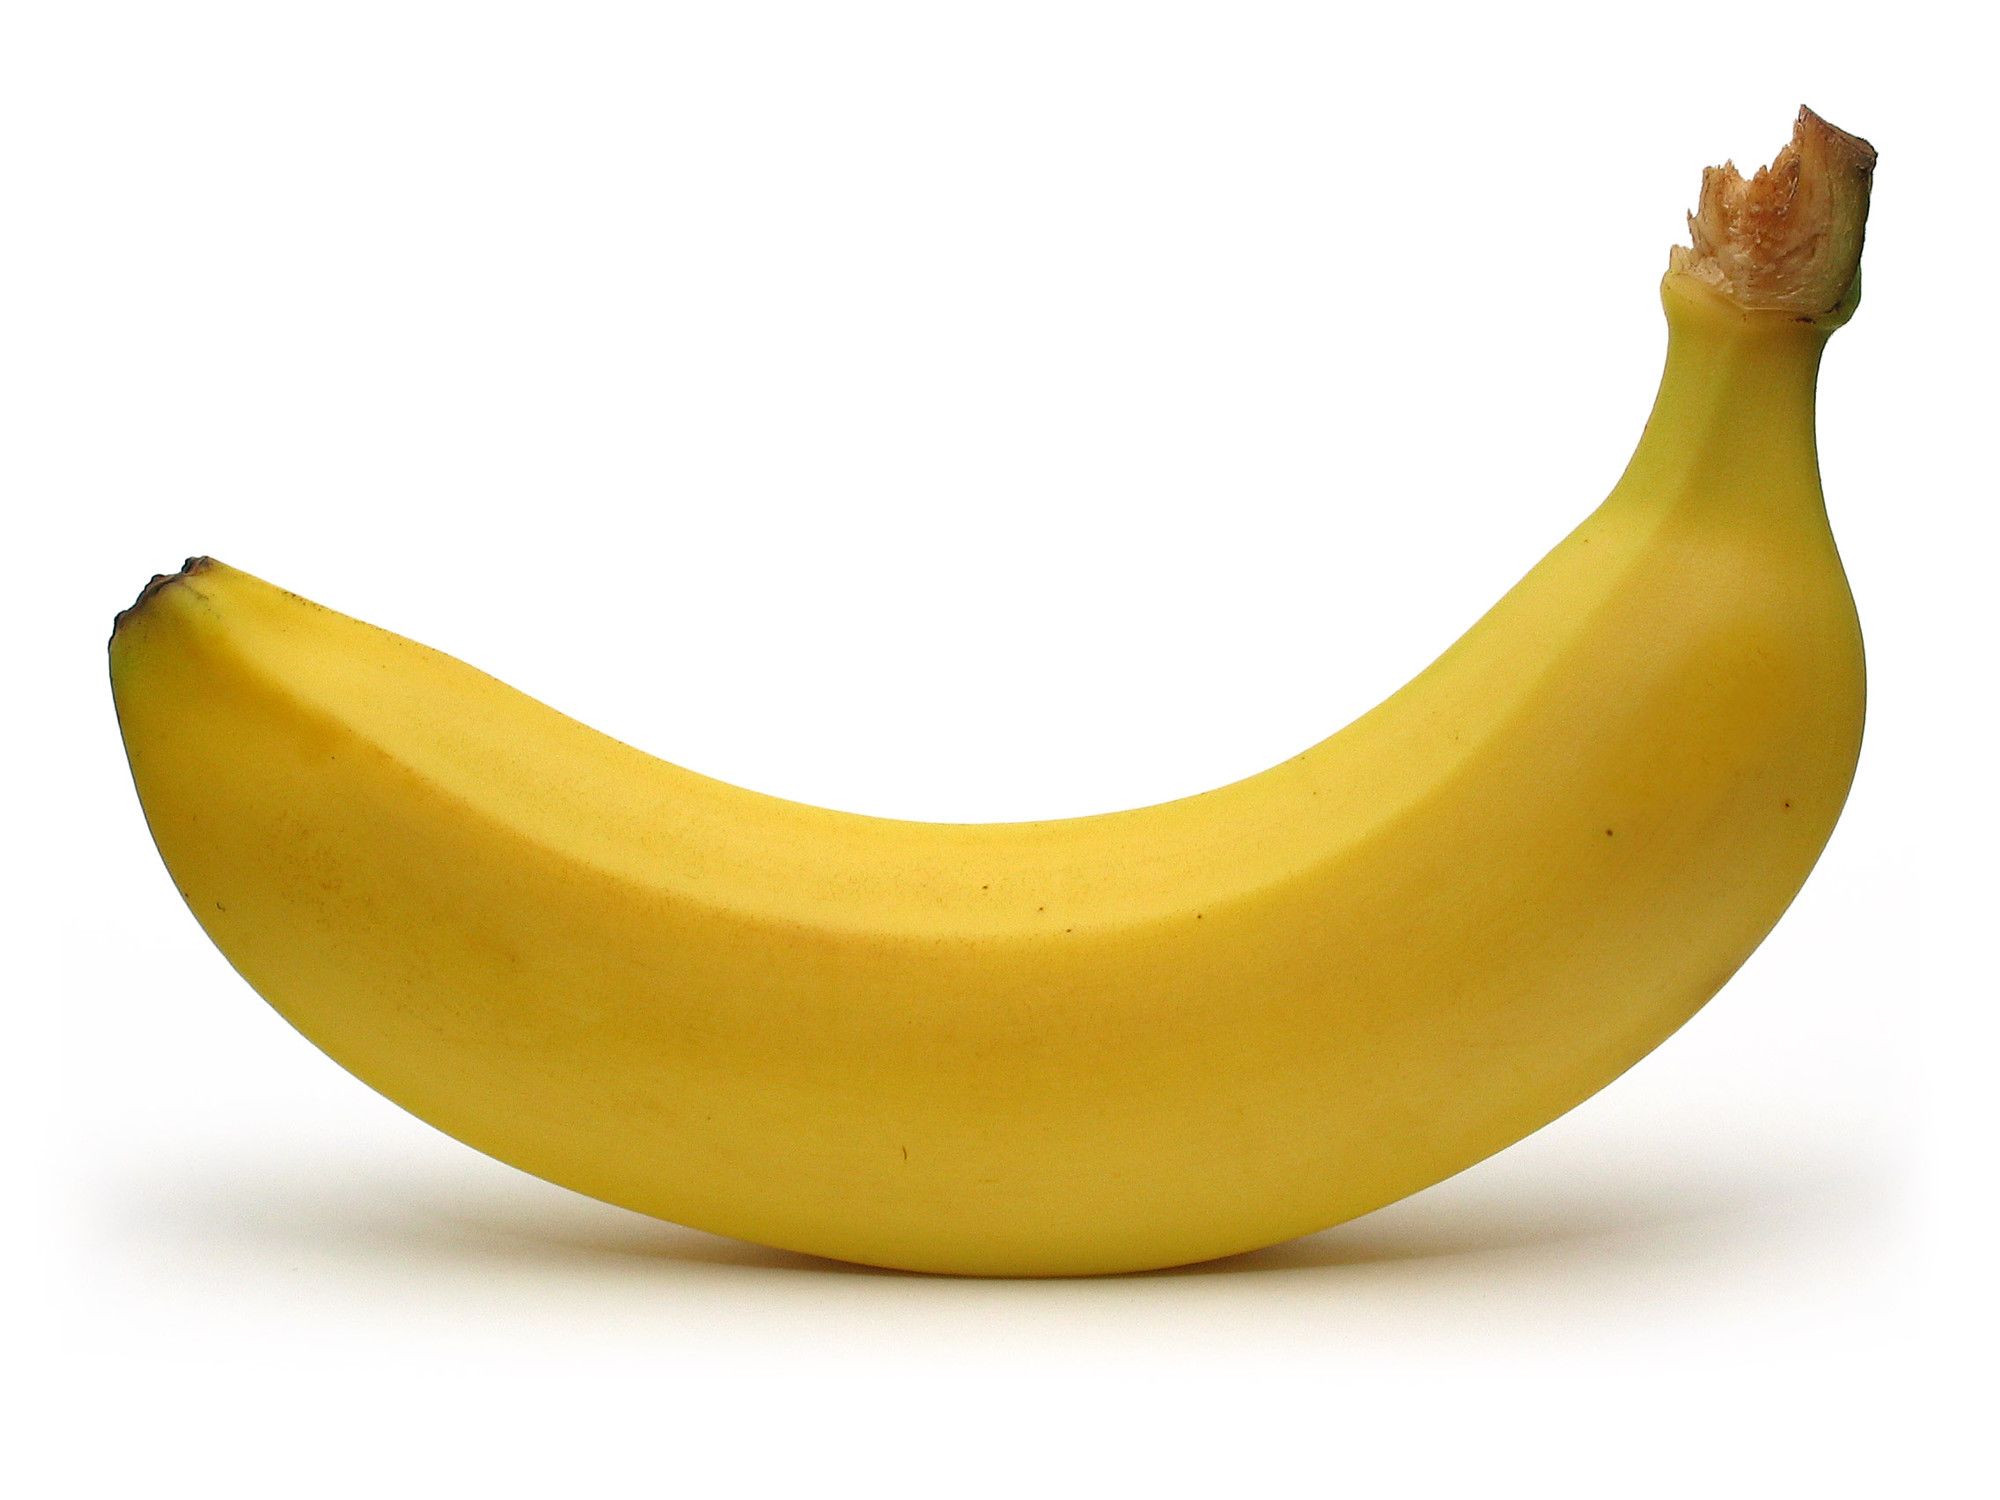 https://ekaenlinea.com/wp-content/uploads/2014/02/Organic_banana.jpg